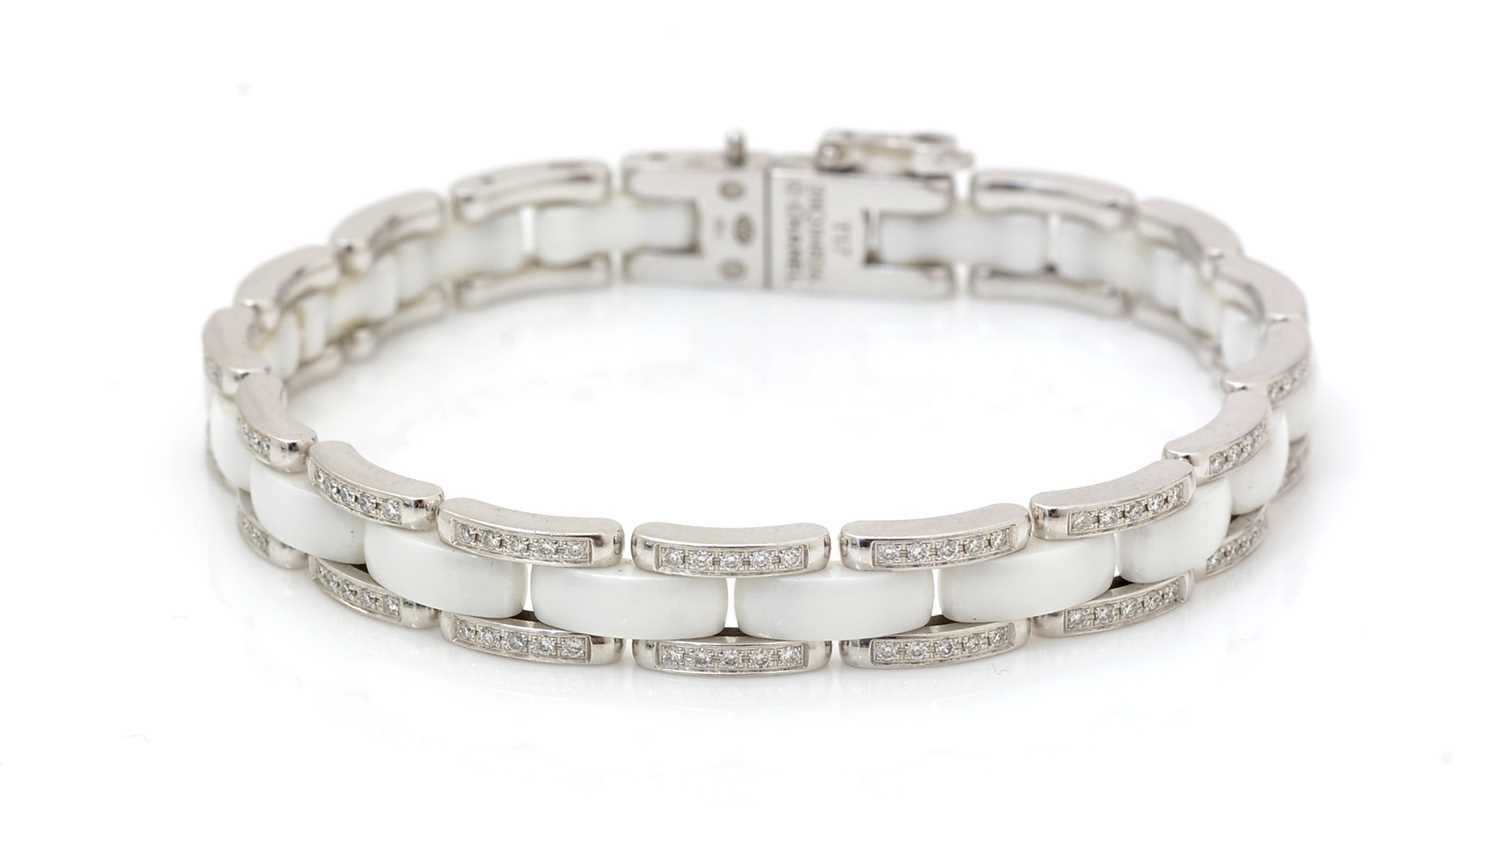 Lot 491 - Chanel Ultra T17: a diamond, white ceramic and 18ct white gold bracelet